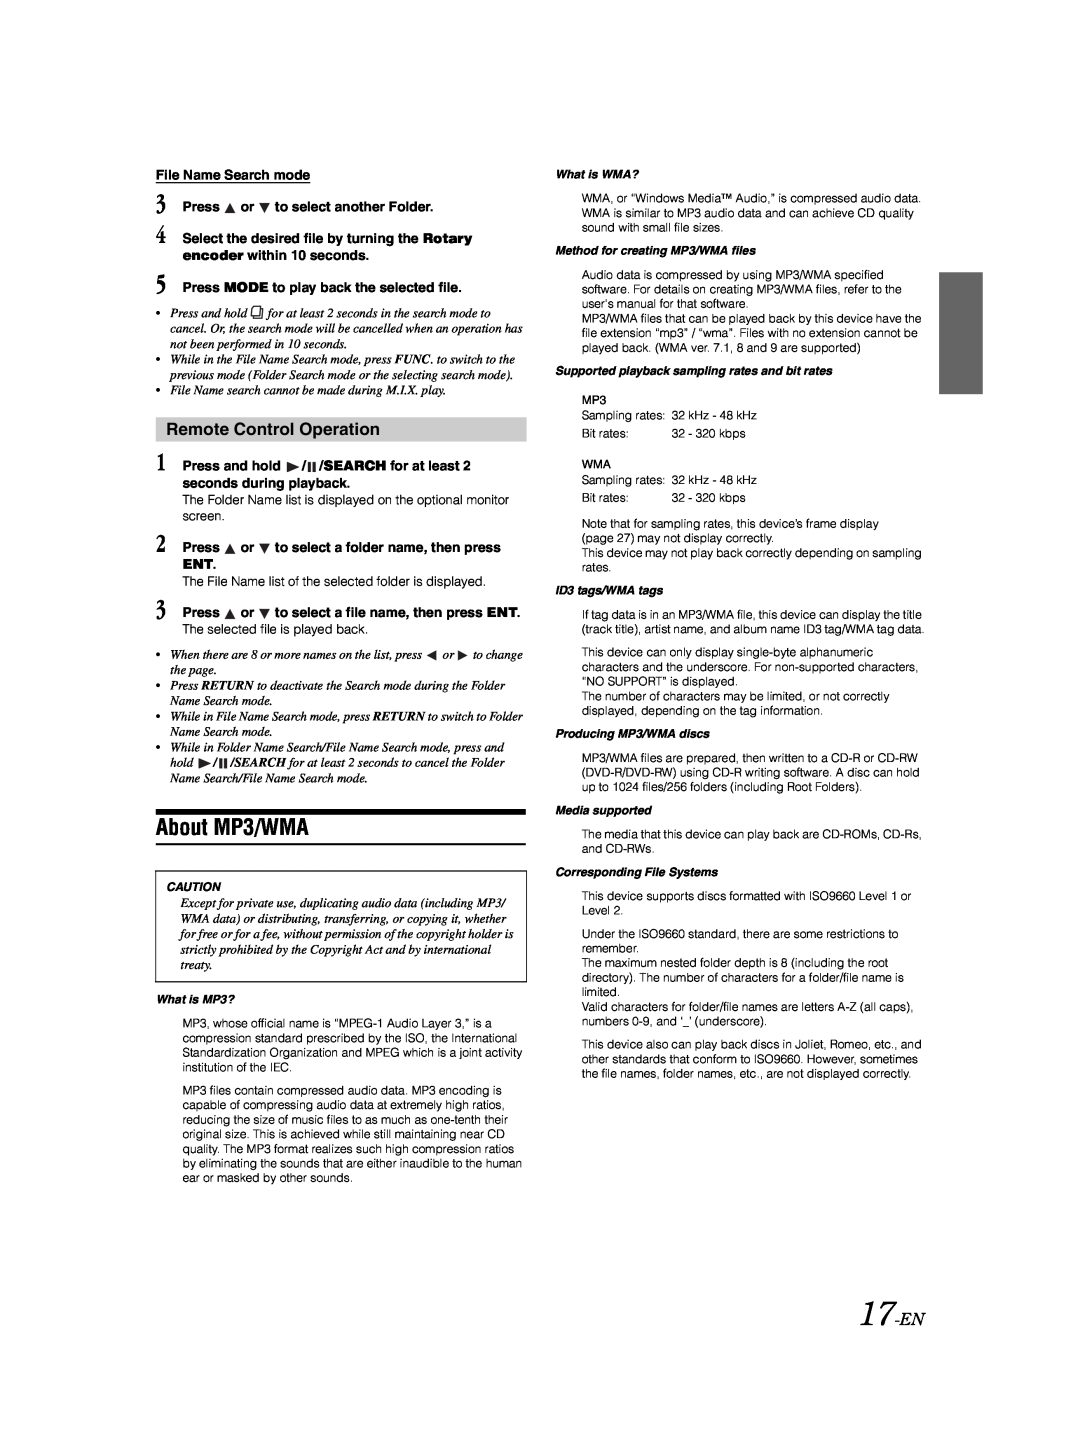 Alpine DVA-9861Ri owner manual About MP3/WMA, Remote Control Operation, 17-EN 